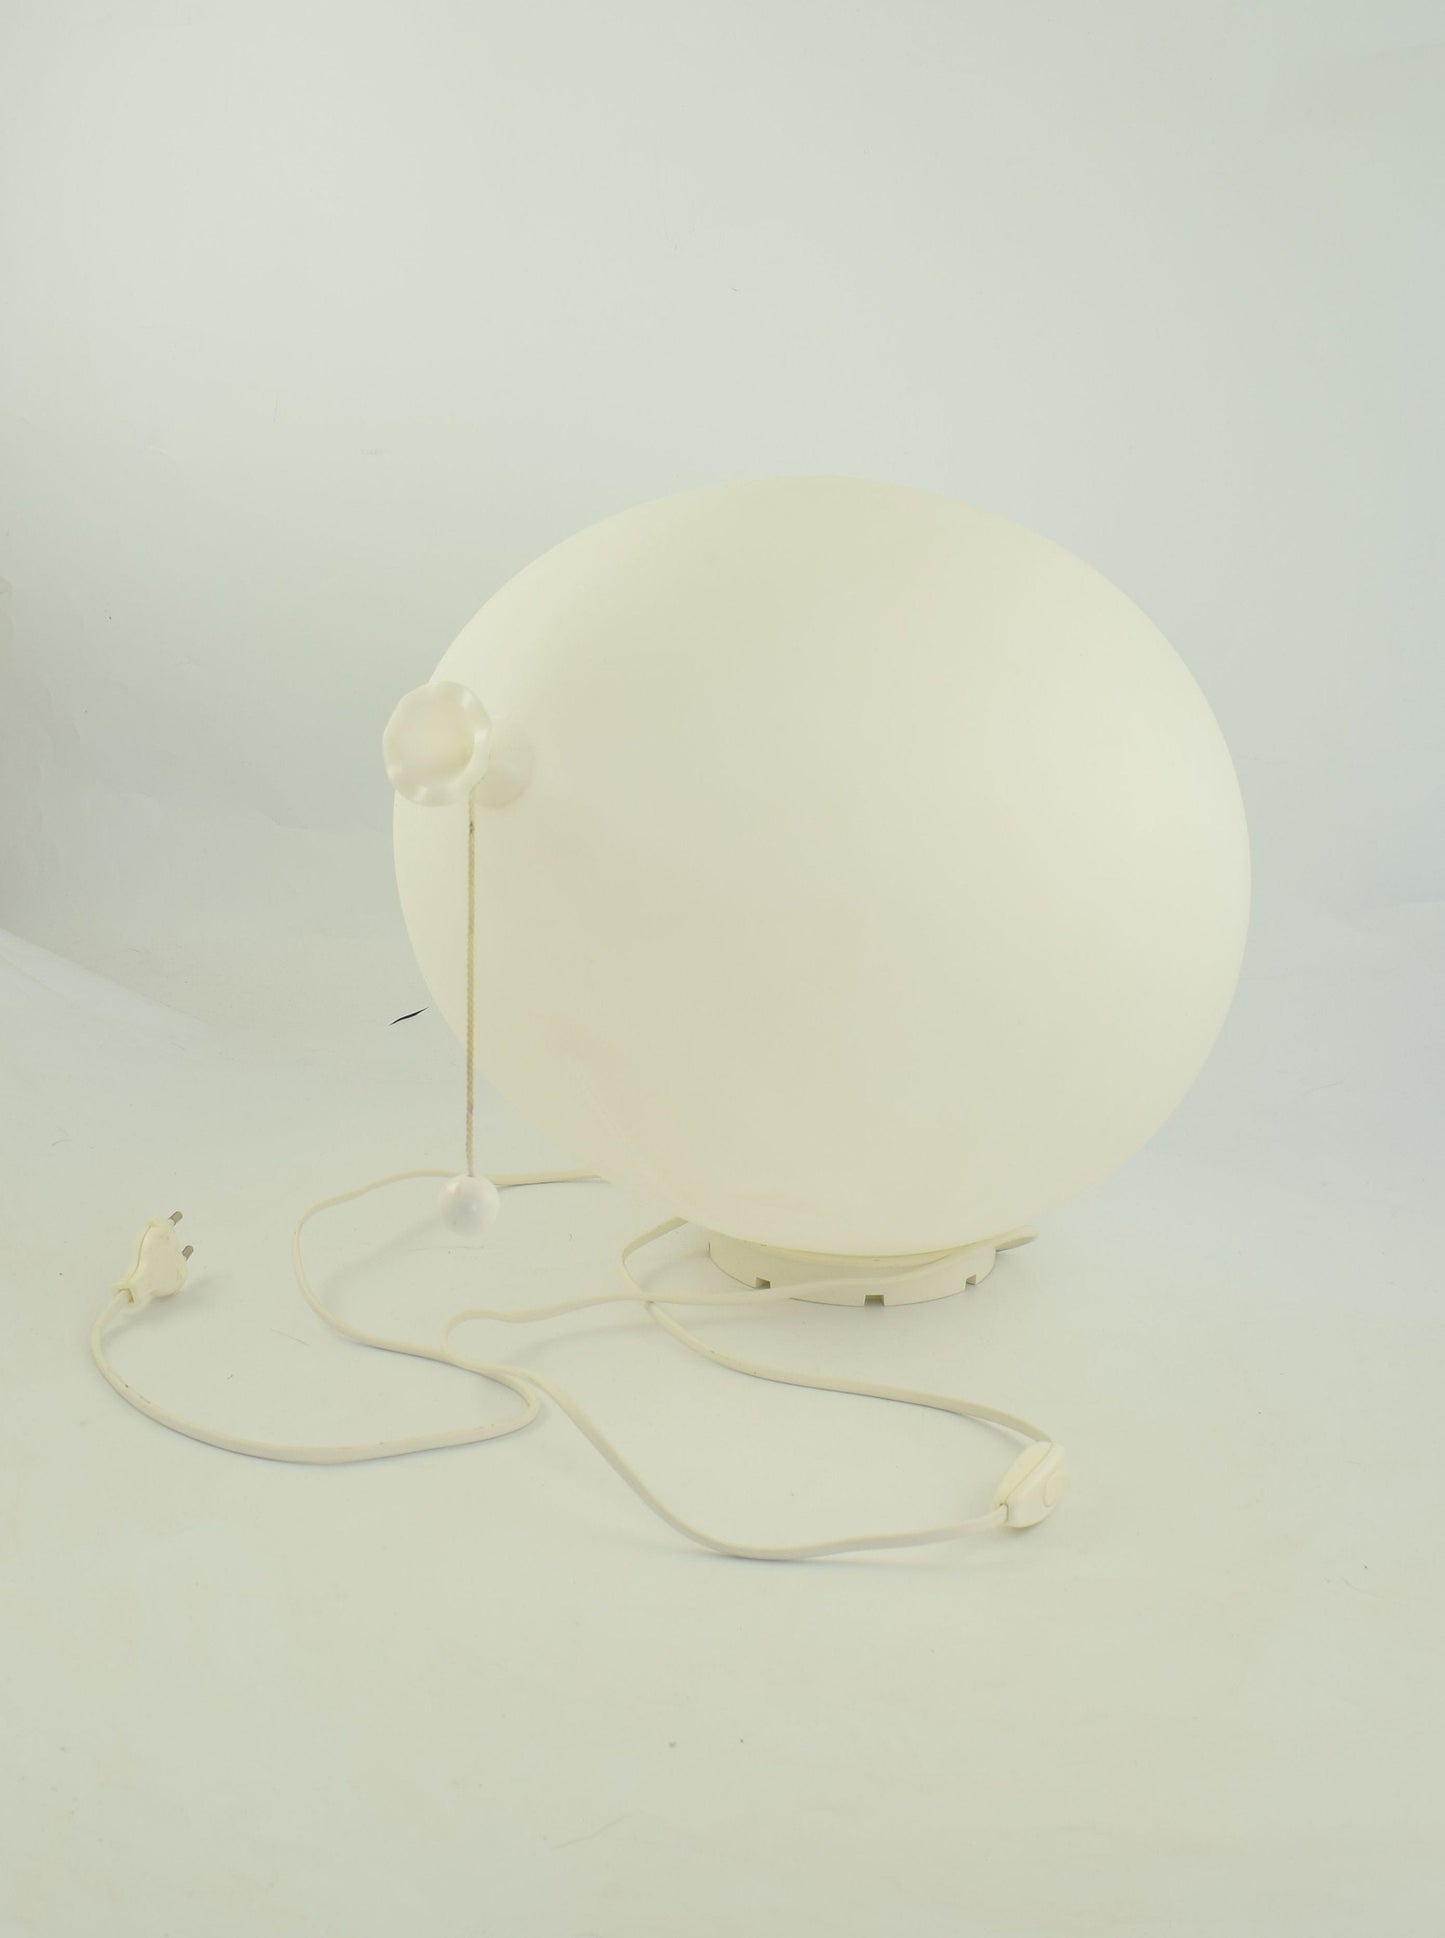 white design Balloon wall/ceiling light or Table lamp XL version from ik (NOT BILUMEN)